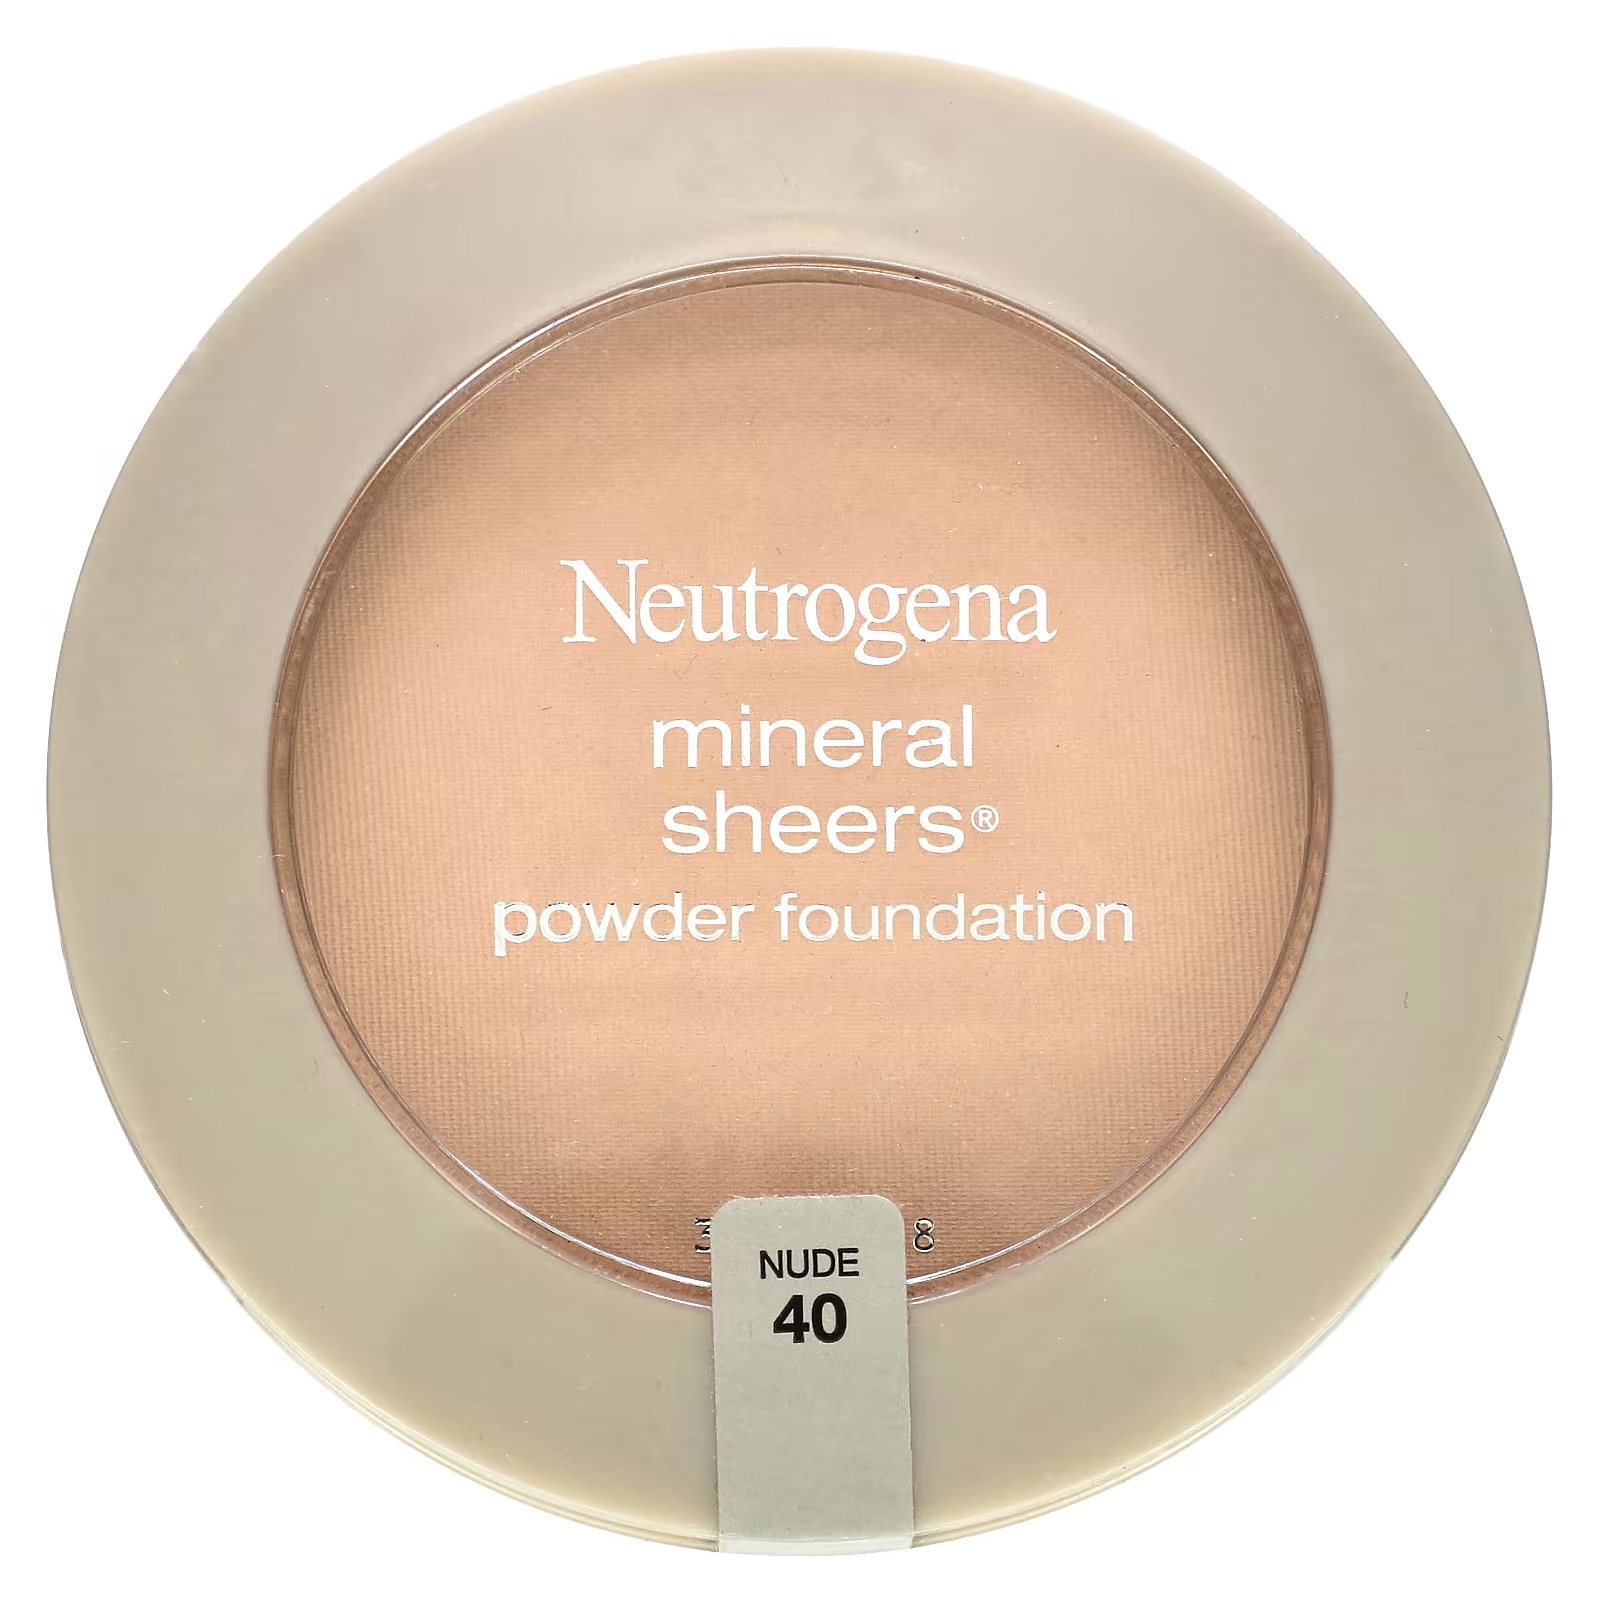 Neutrogena Mineral Sheers Пудра-пудра телесного цвета 40, 0,34 унции (9,6 г) neutrogena mineral sheers тональная пудра оттенок nude 40 9 6 г 0 34 унции